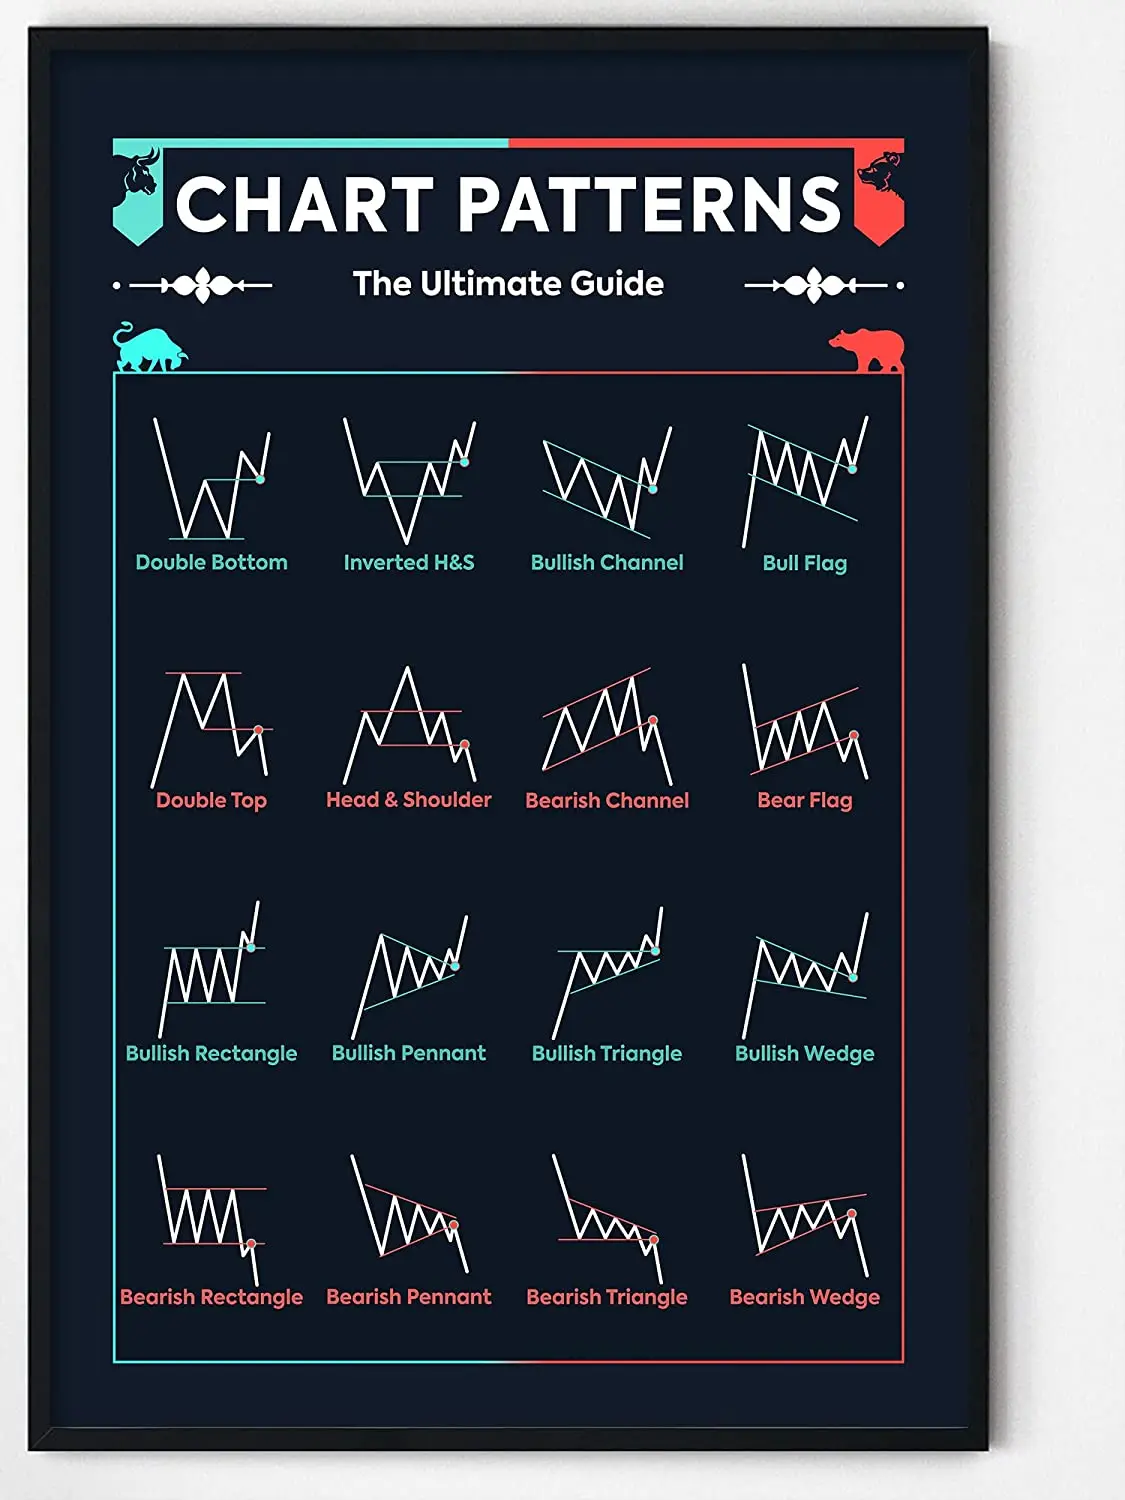 

Stock Poster - Trading Chart Patterns Cheat Sheet Poster for Stock Market, Bitcoin - Stock Trader Decor Artwork Gift